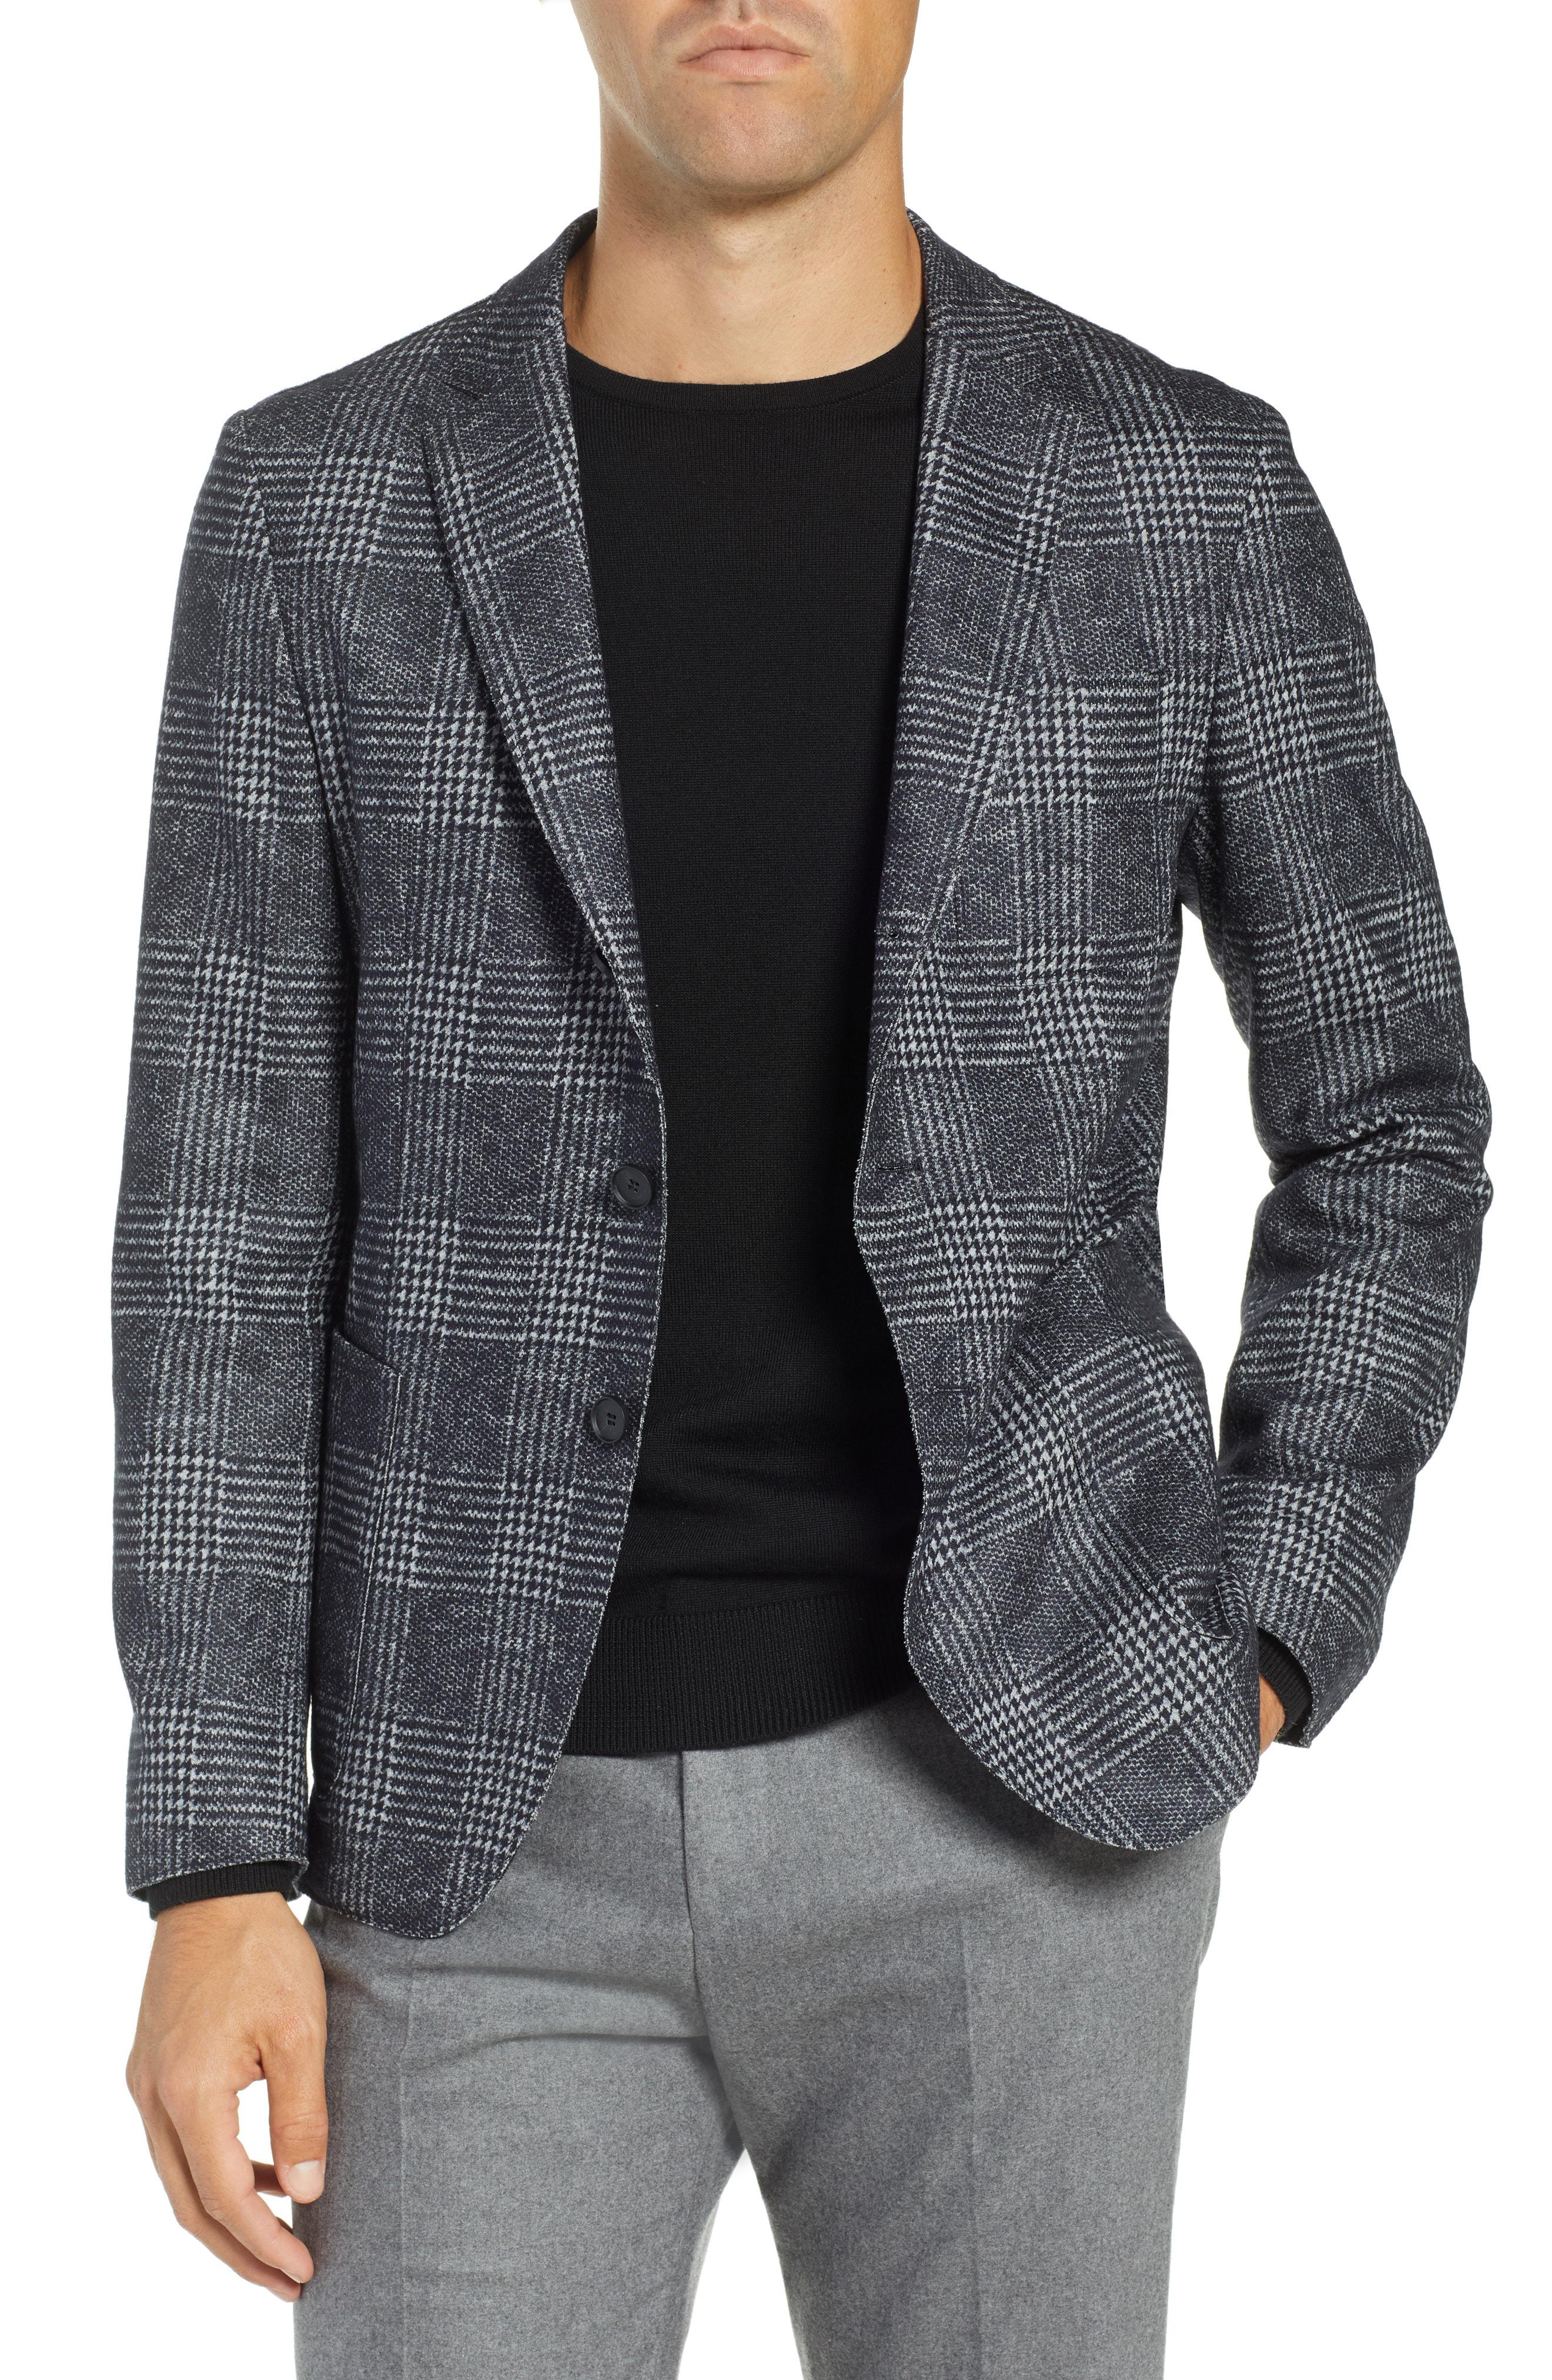 Lyst - Boss Nixan Slim Fit Plaid Wool & Cotton Sport Coat in Gray for Men